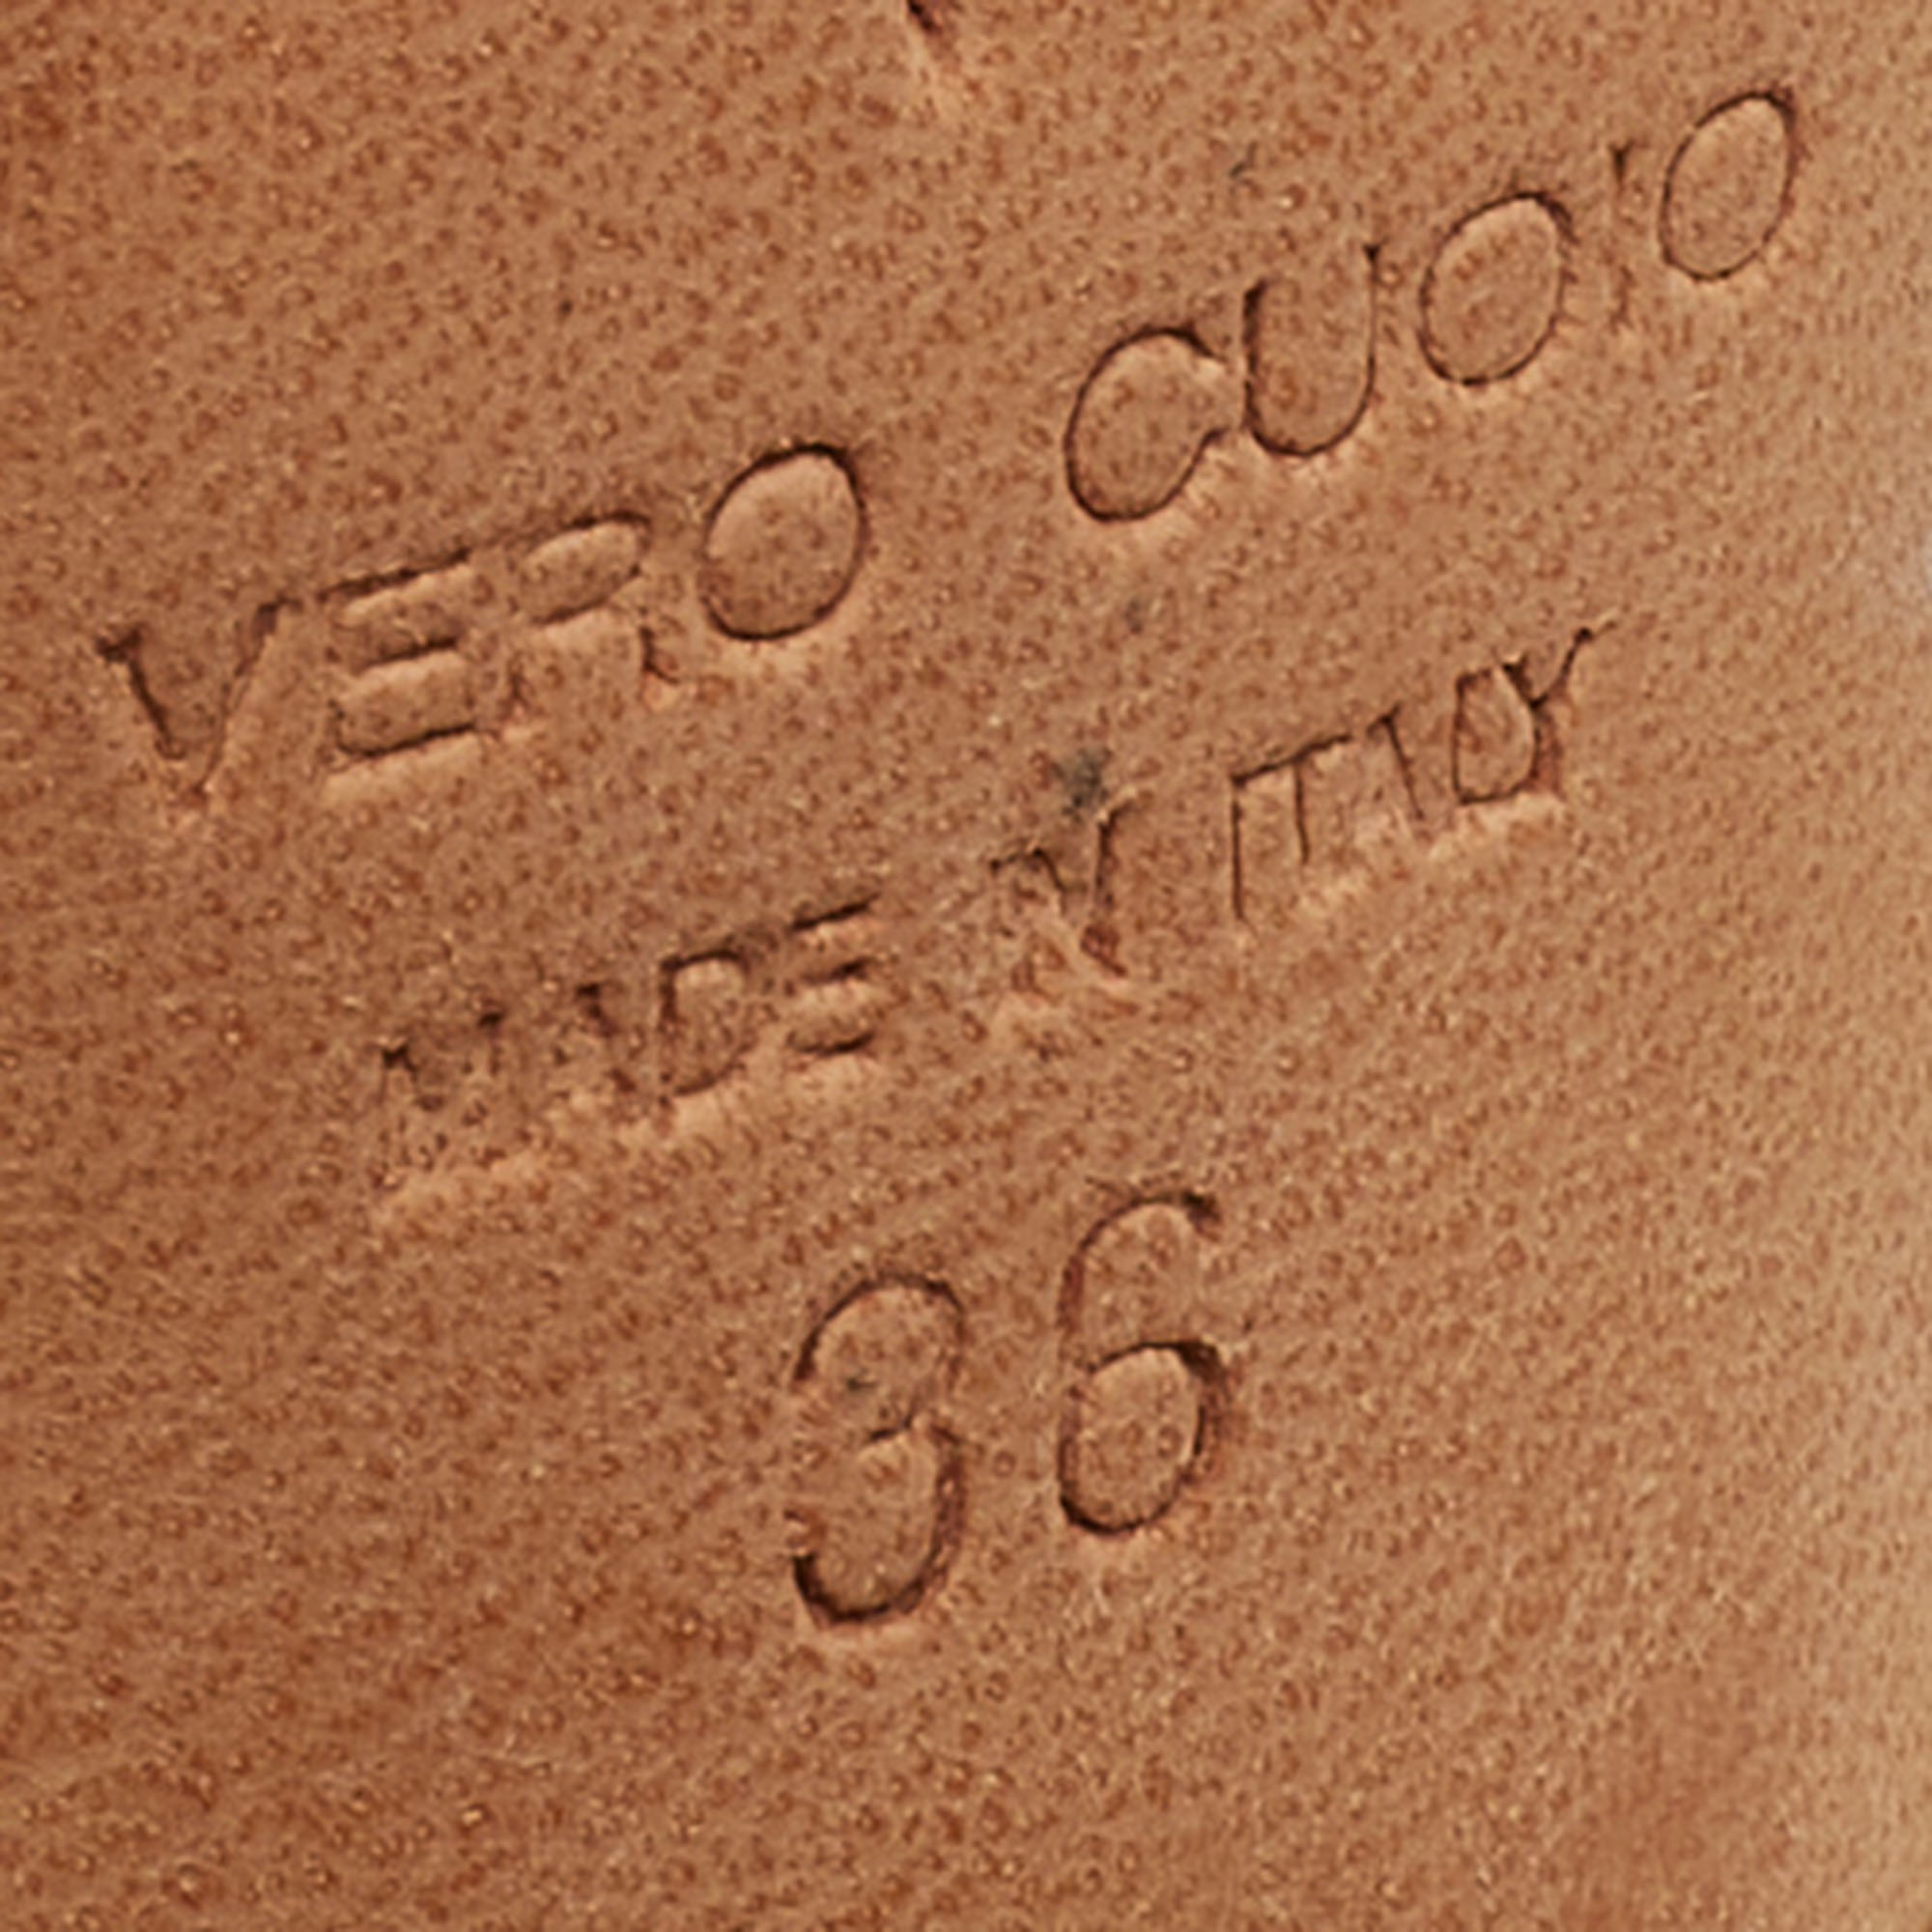 Giuseppe Zanotti Two Tone Patent Leather Crisscross Ankle Strap Sandals Size 36